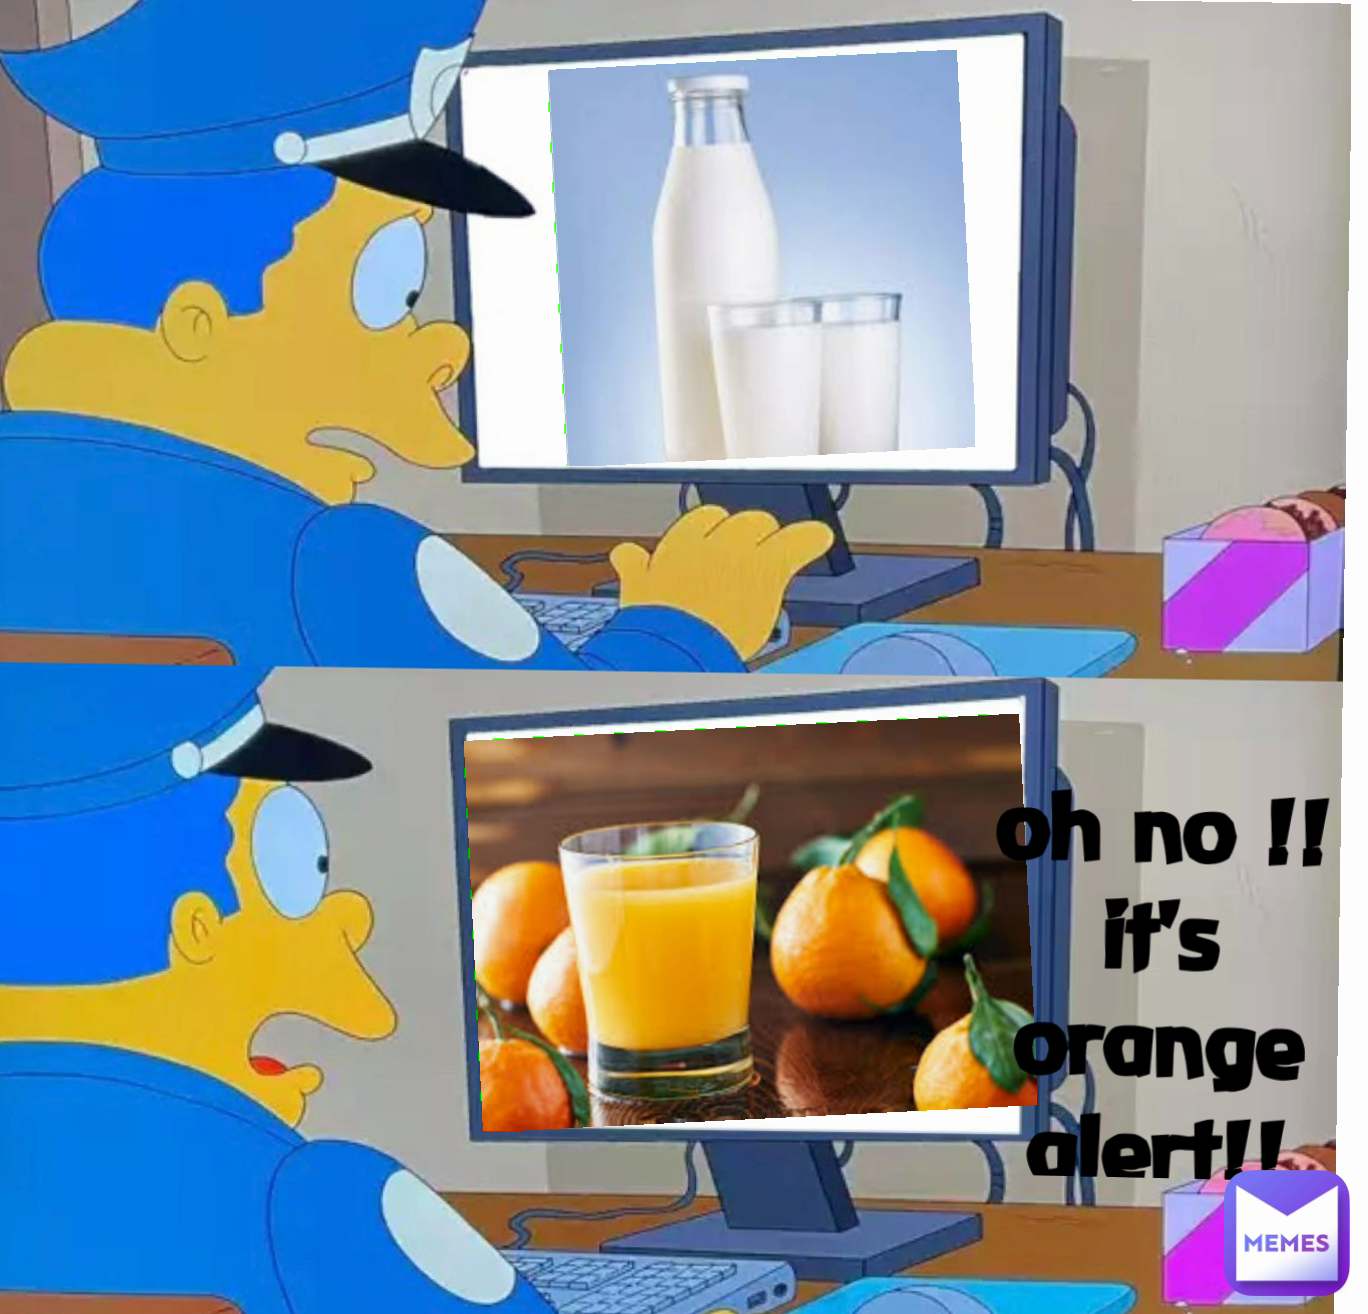 oh no !! it's orange alert!!